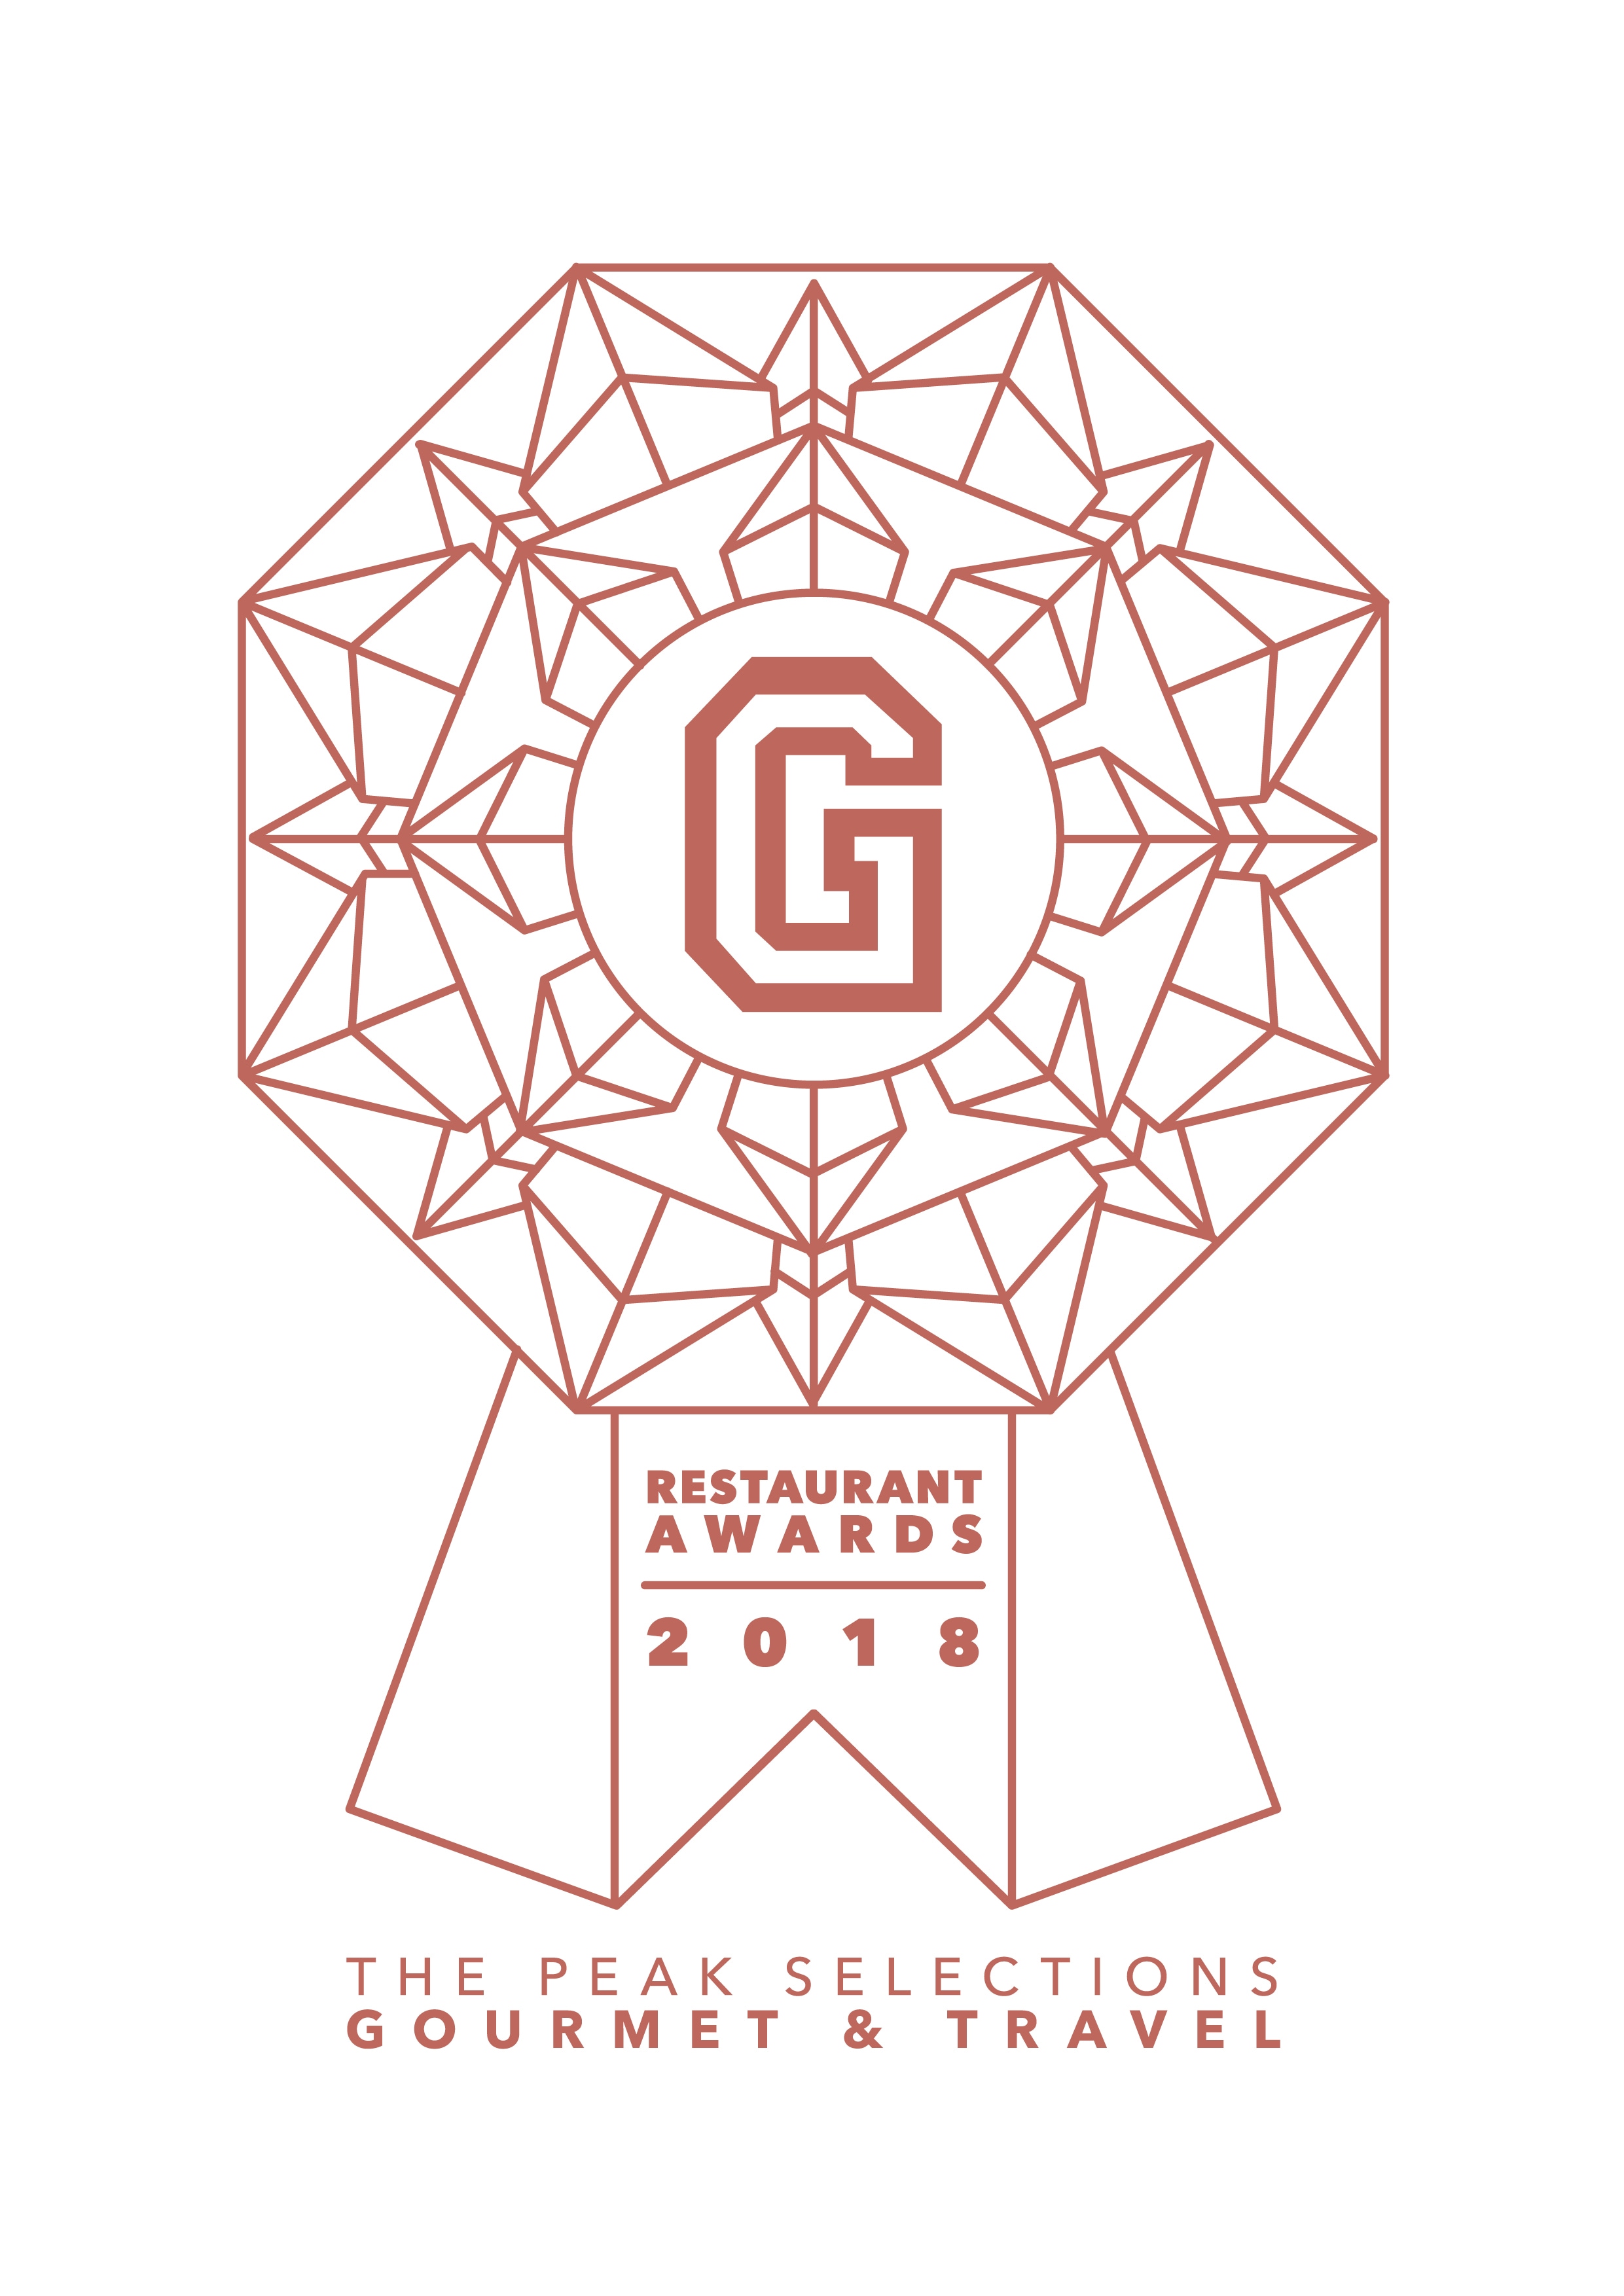 G Restaurant Awards 2018 — Awards of Excellence